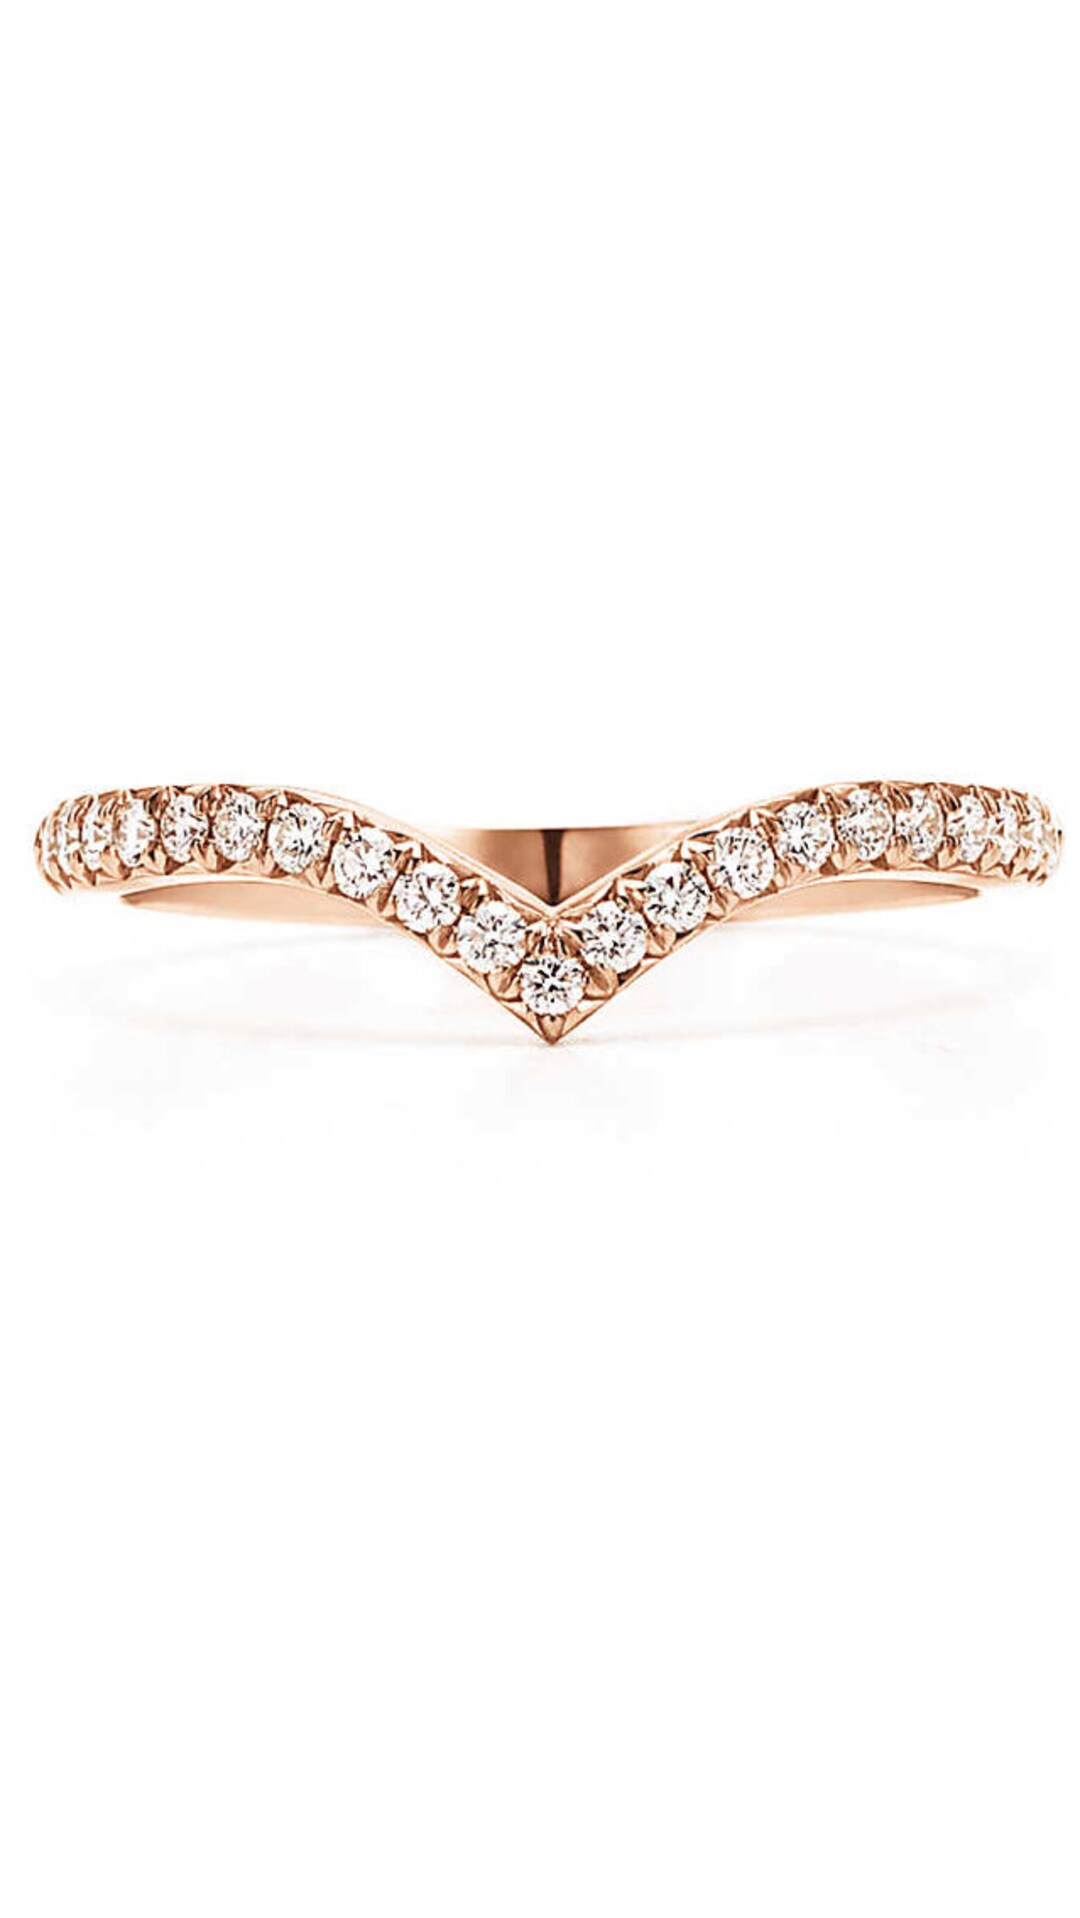 Diamond VIRTUAL BIRD Engagement Ring in 14K Rose Gold Wedding - Etsy